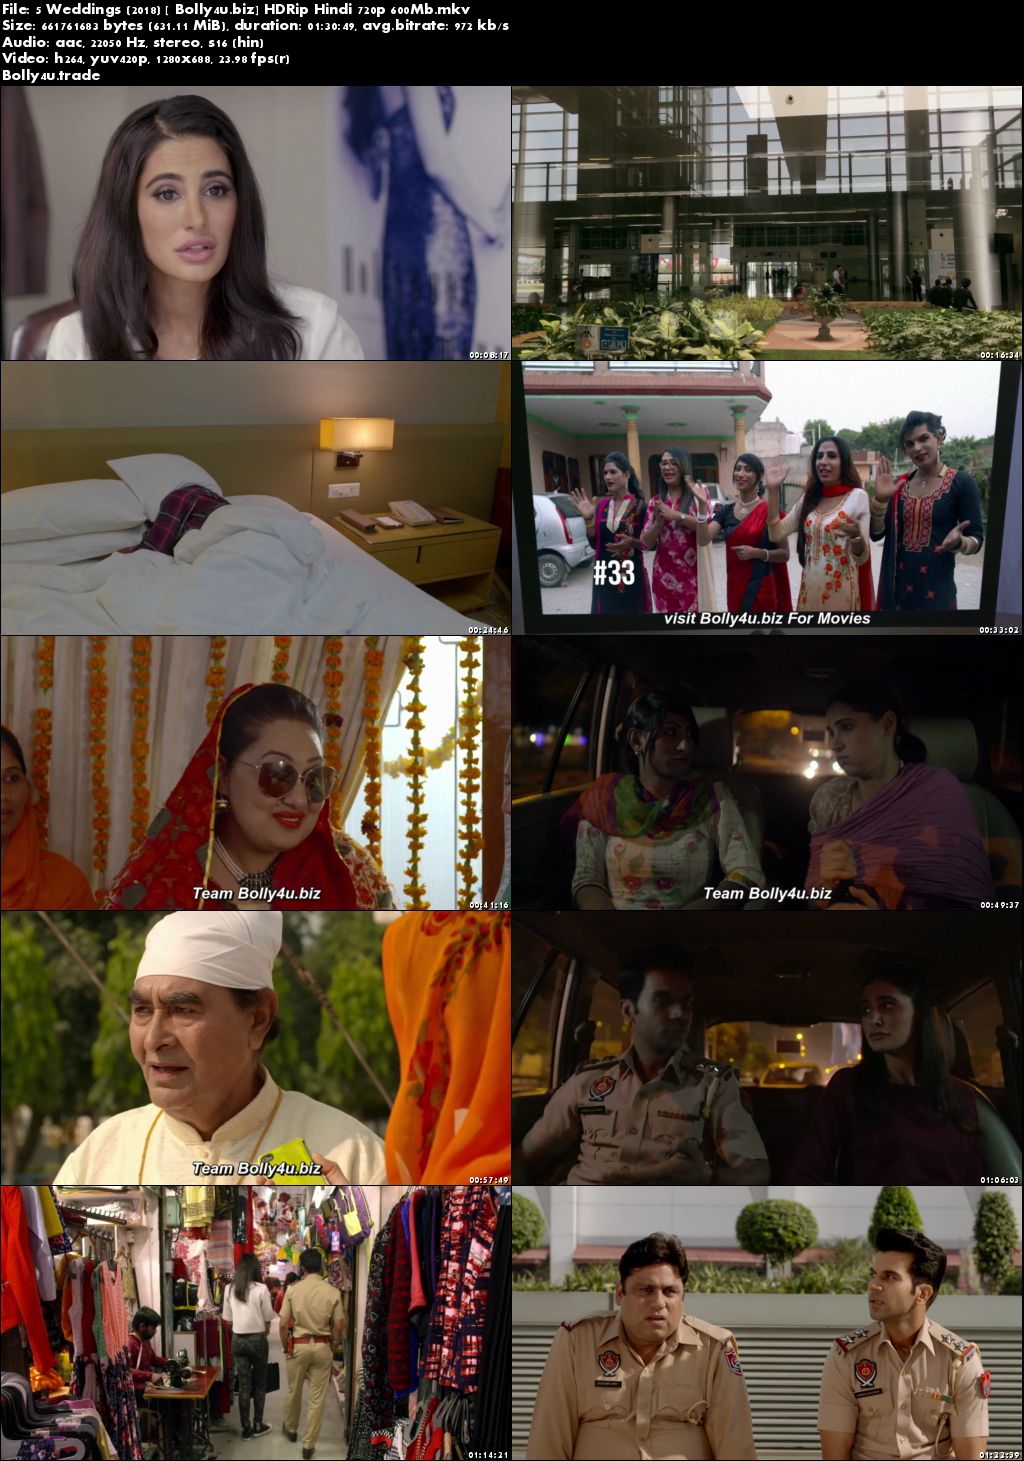 5 Weddings 2018 HDRip 300Mb Full Hindi Movie Download 480p